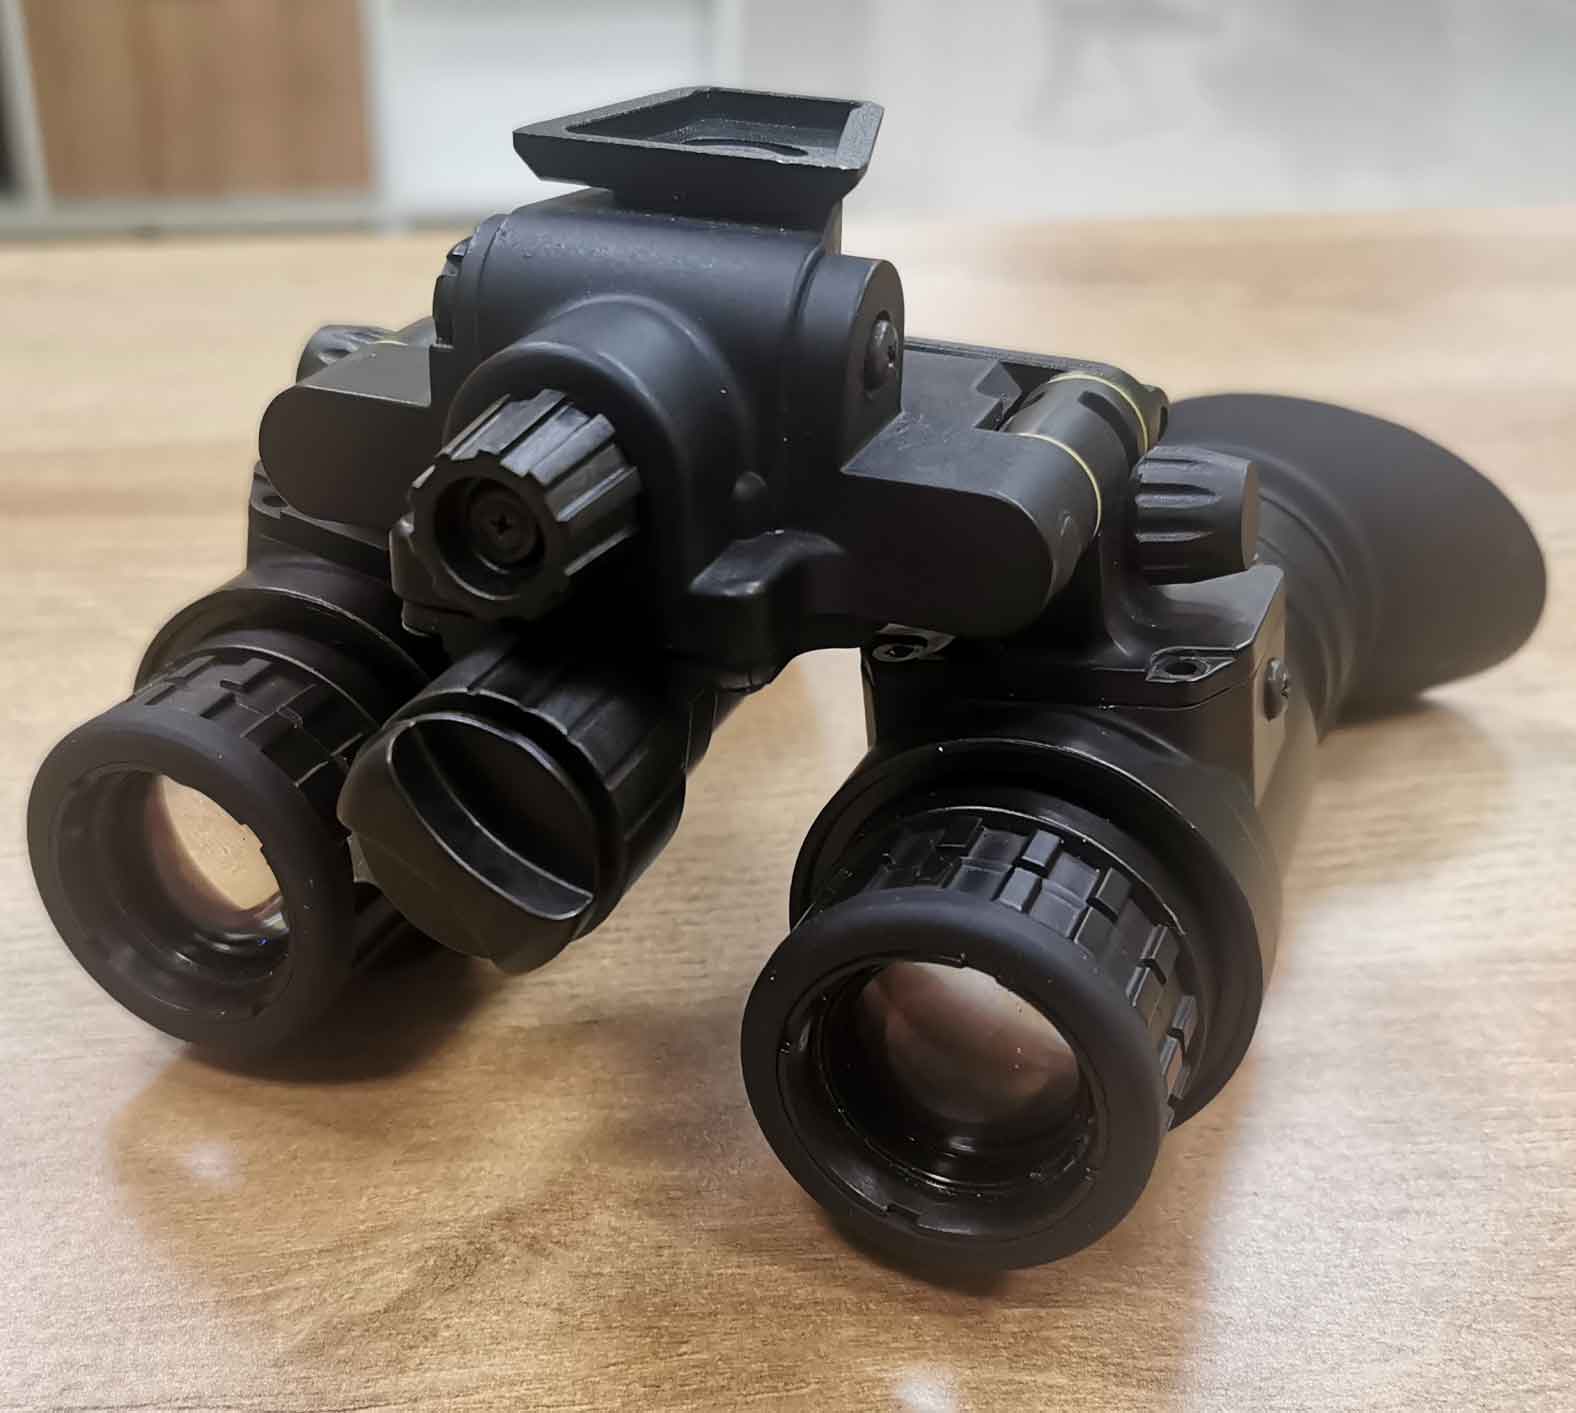 MH-HNVG helmet mounted night vision binoculars